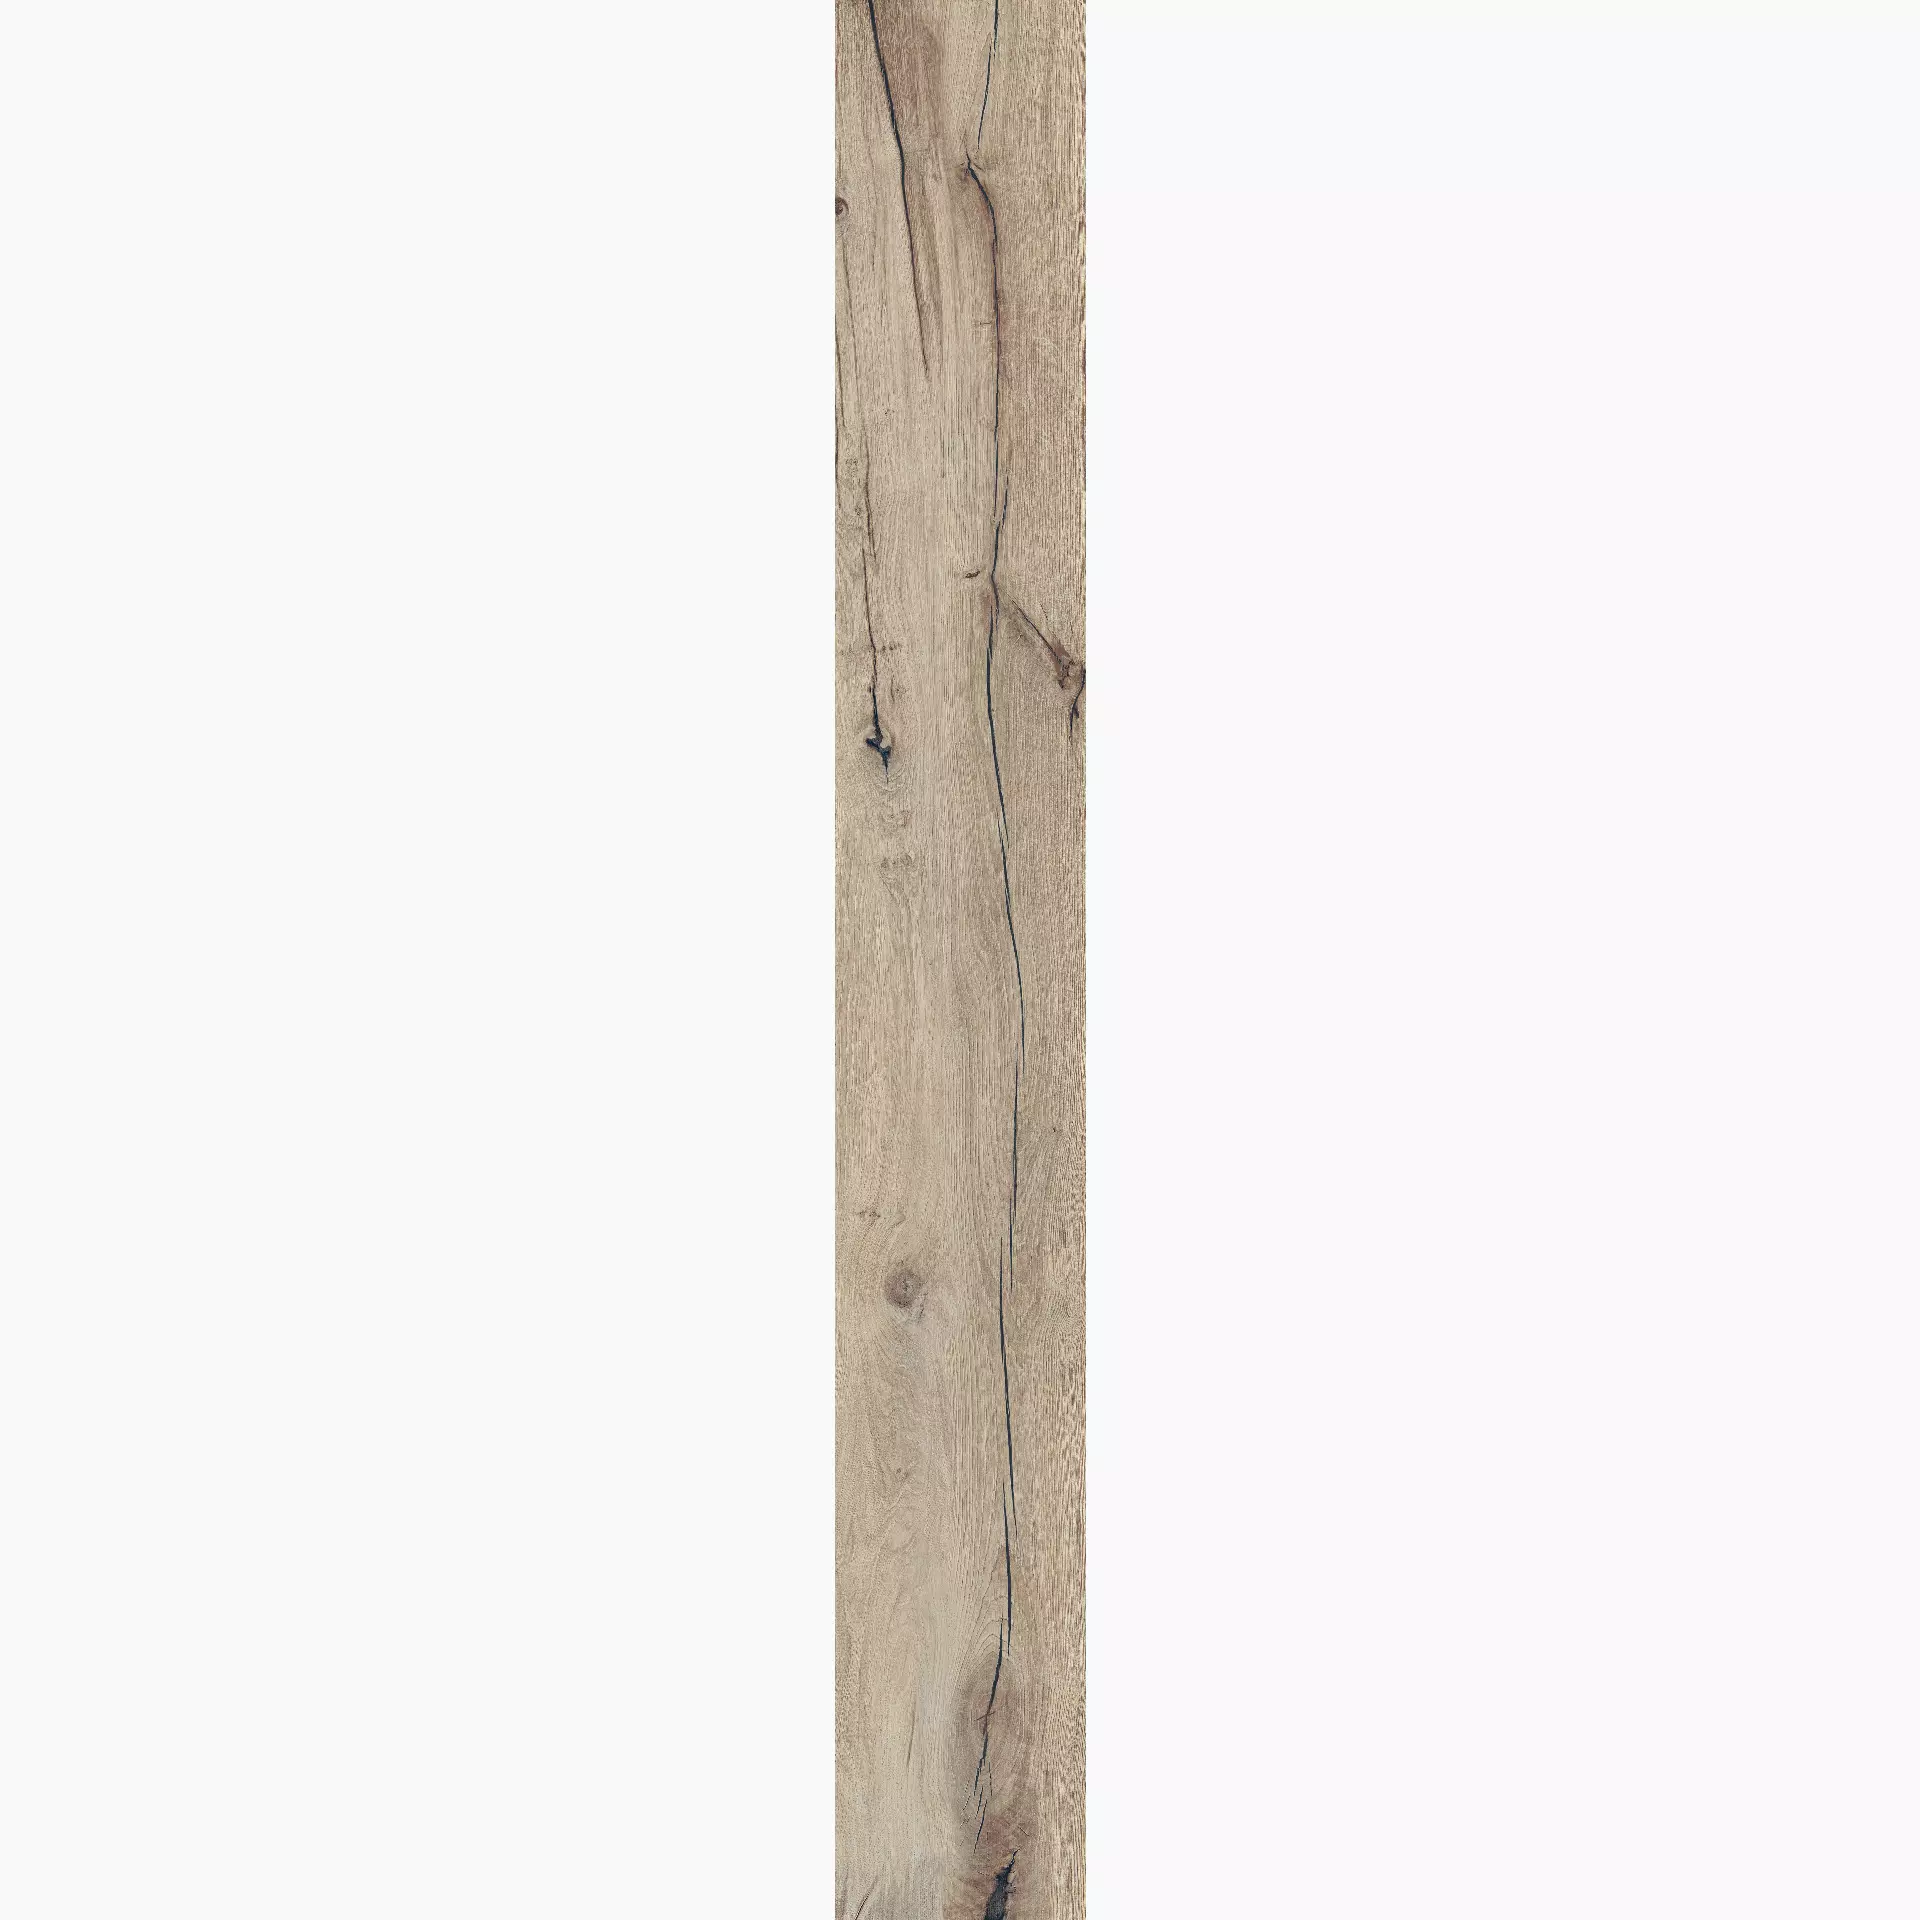 Flaviker Nordik Wood Beige Naturale PF60003672 26x200cm rectified 6mm